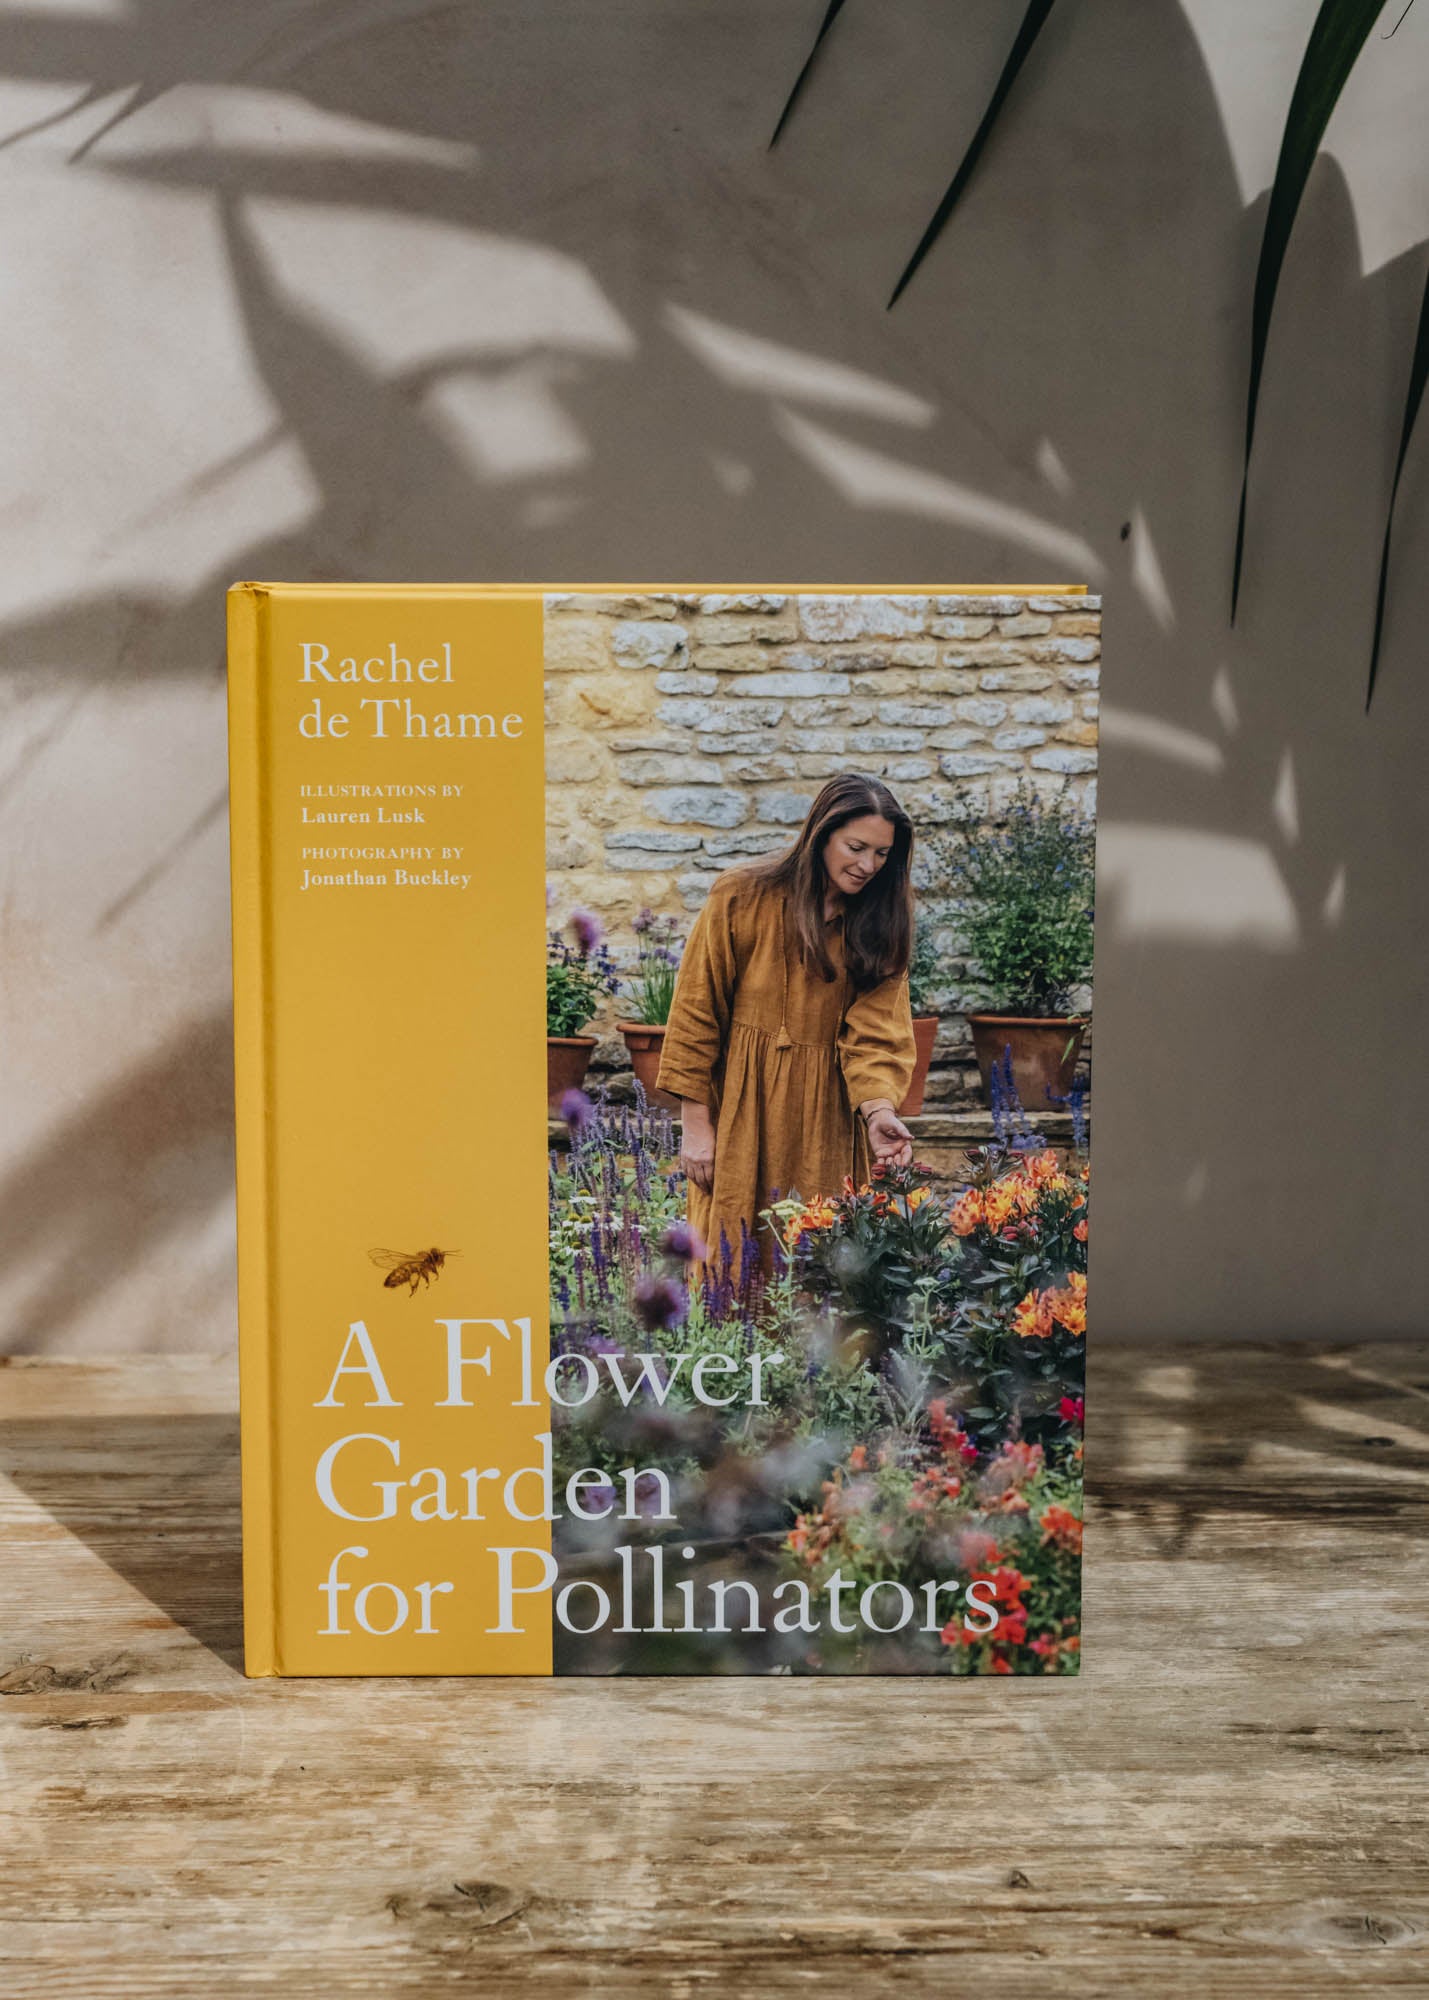 A Flower Garden for Pollinators by Rachel de Thame